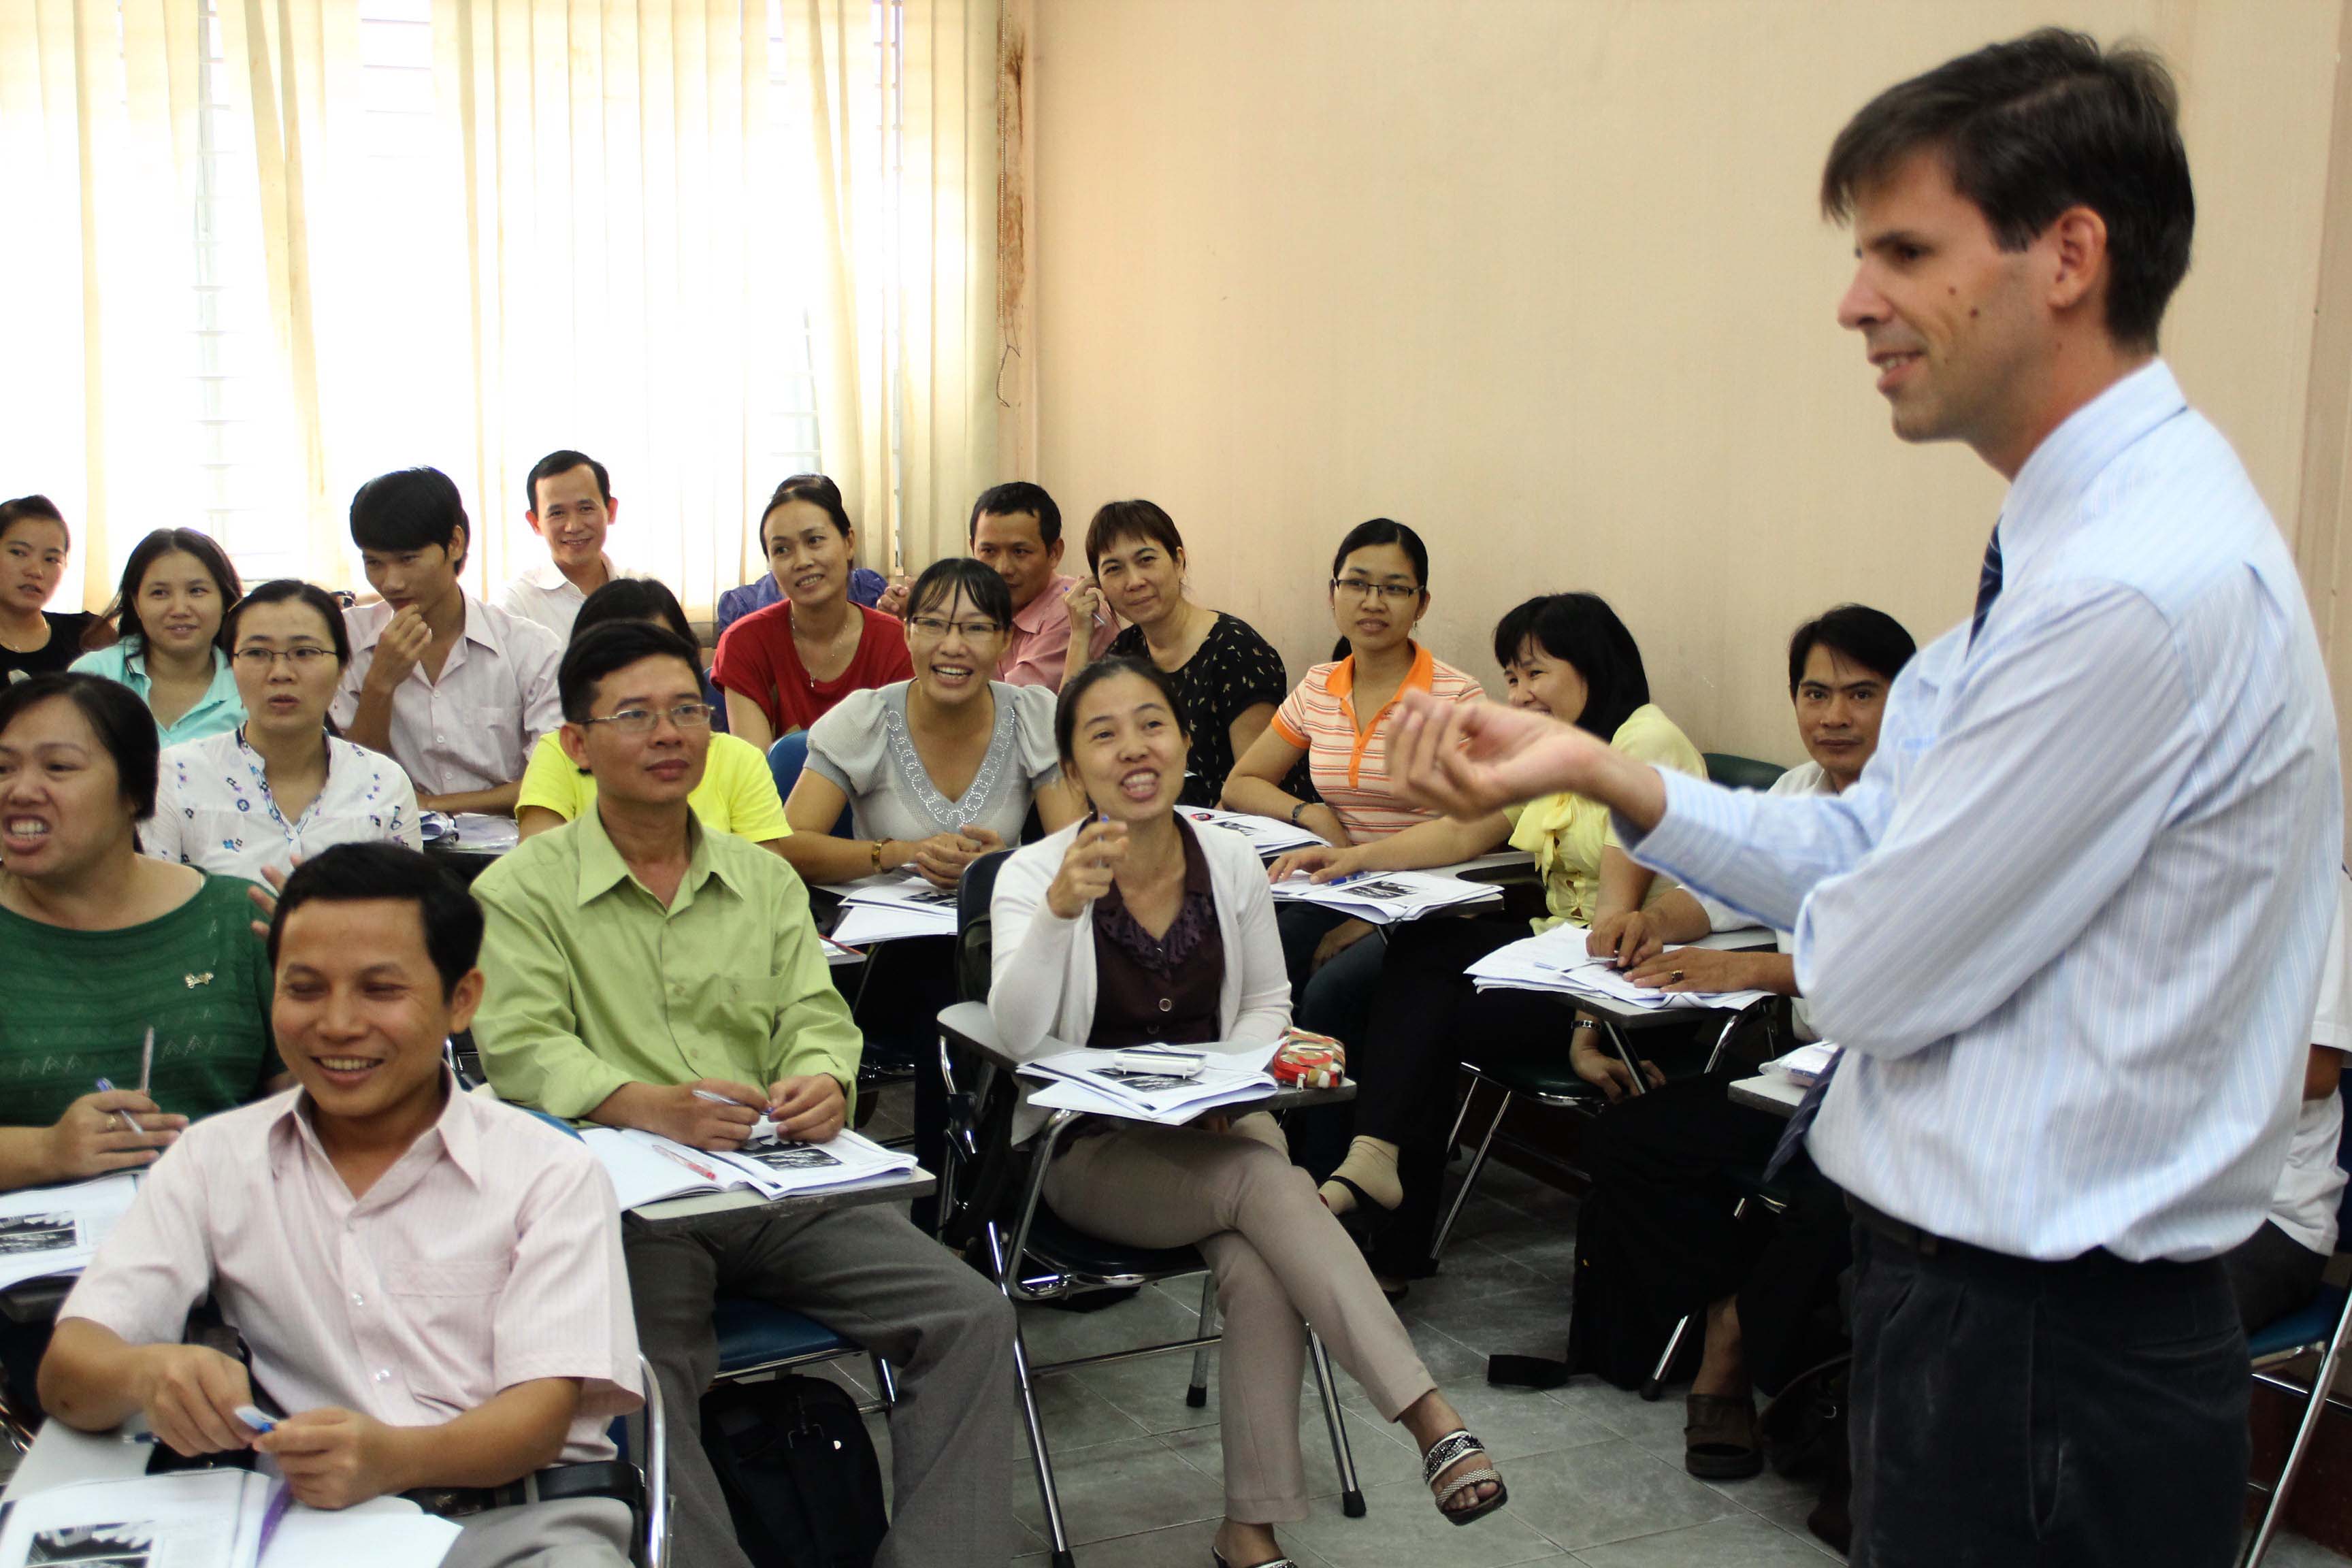 The English teachers in Vietnam